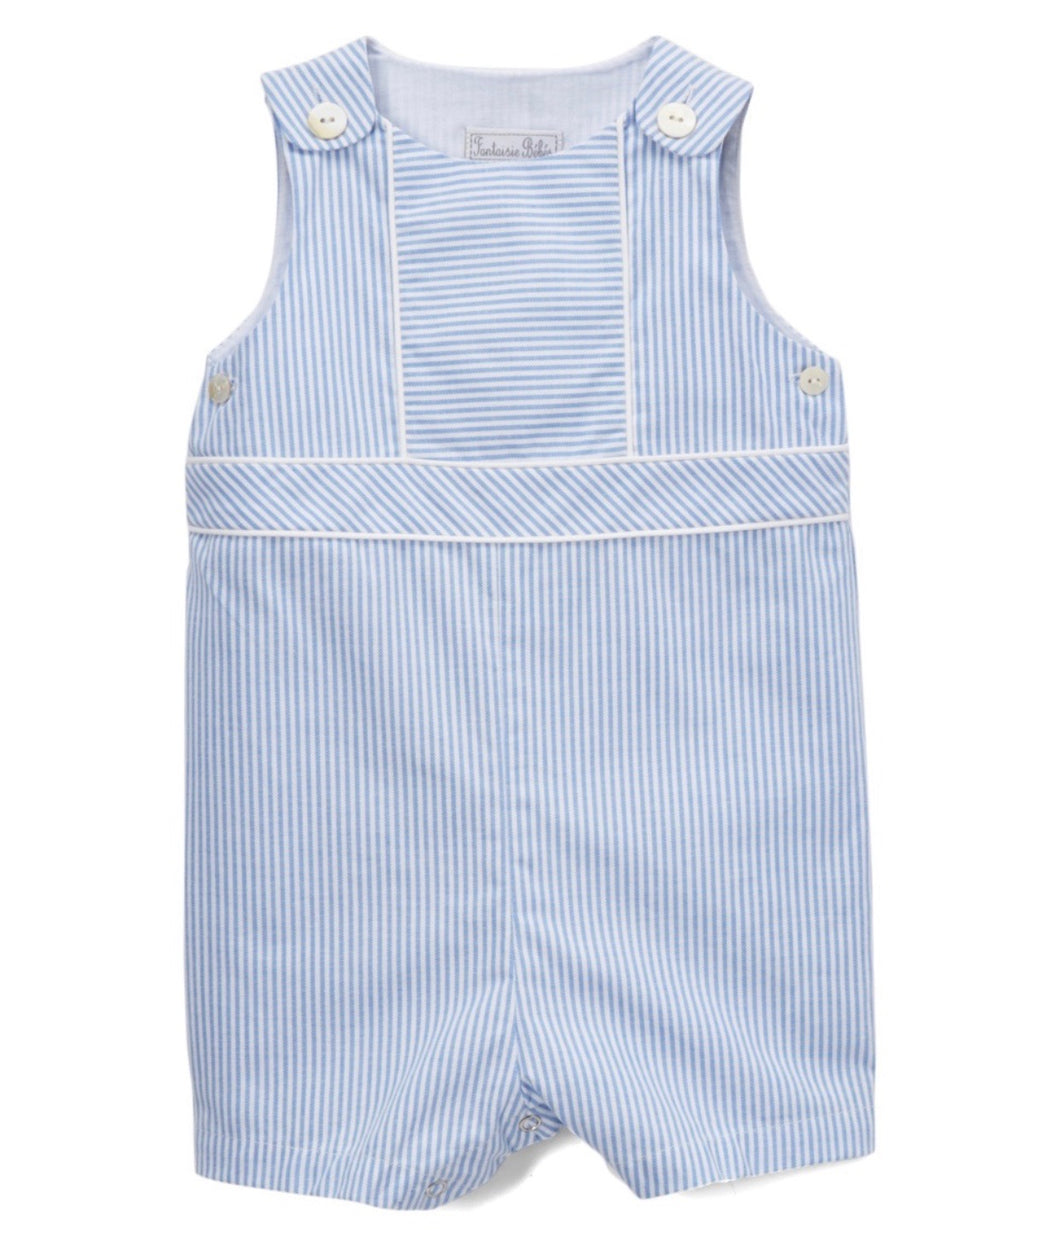 Classic Blue & White Striped Shortalls